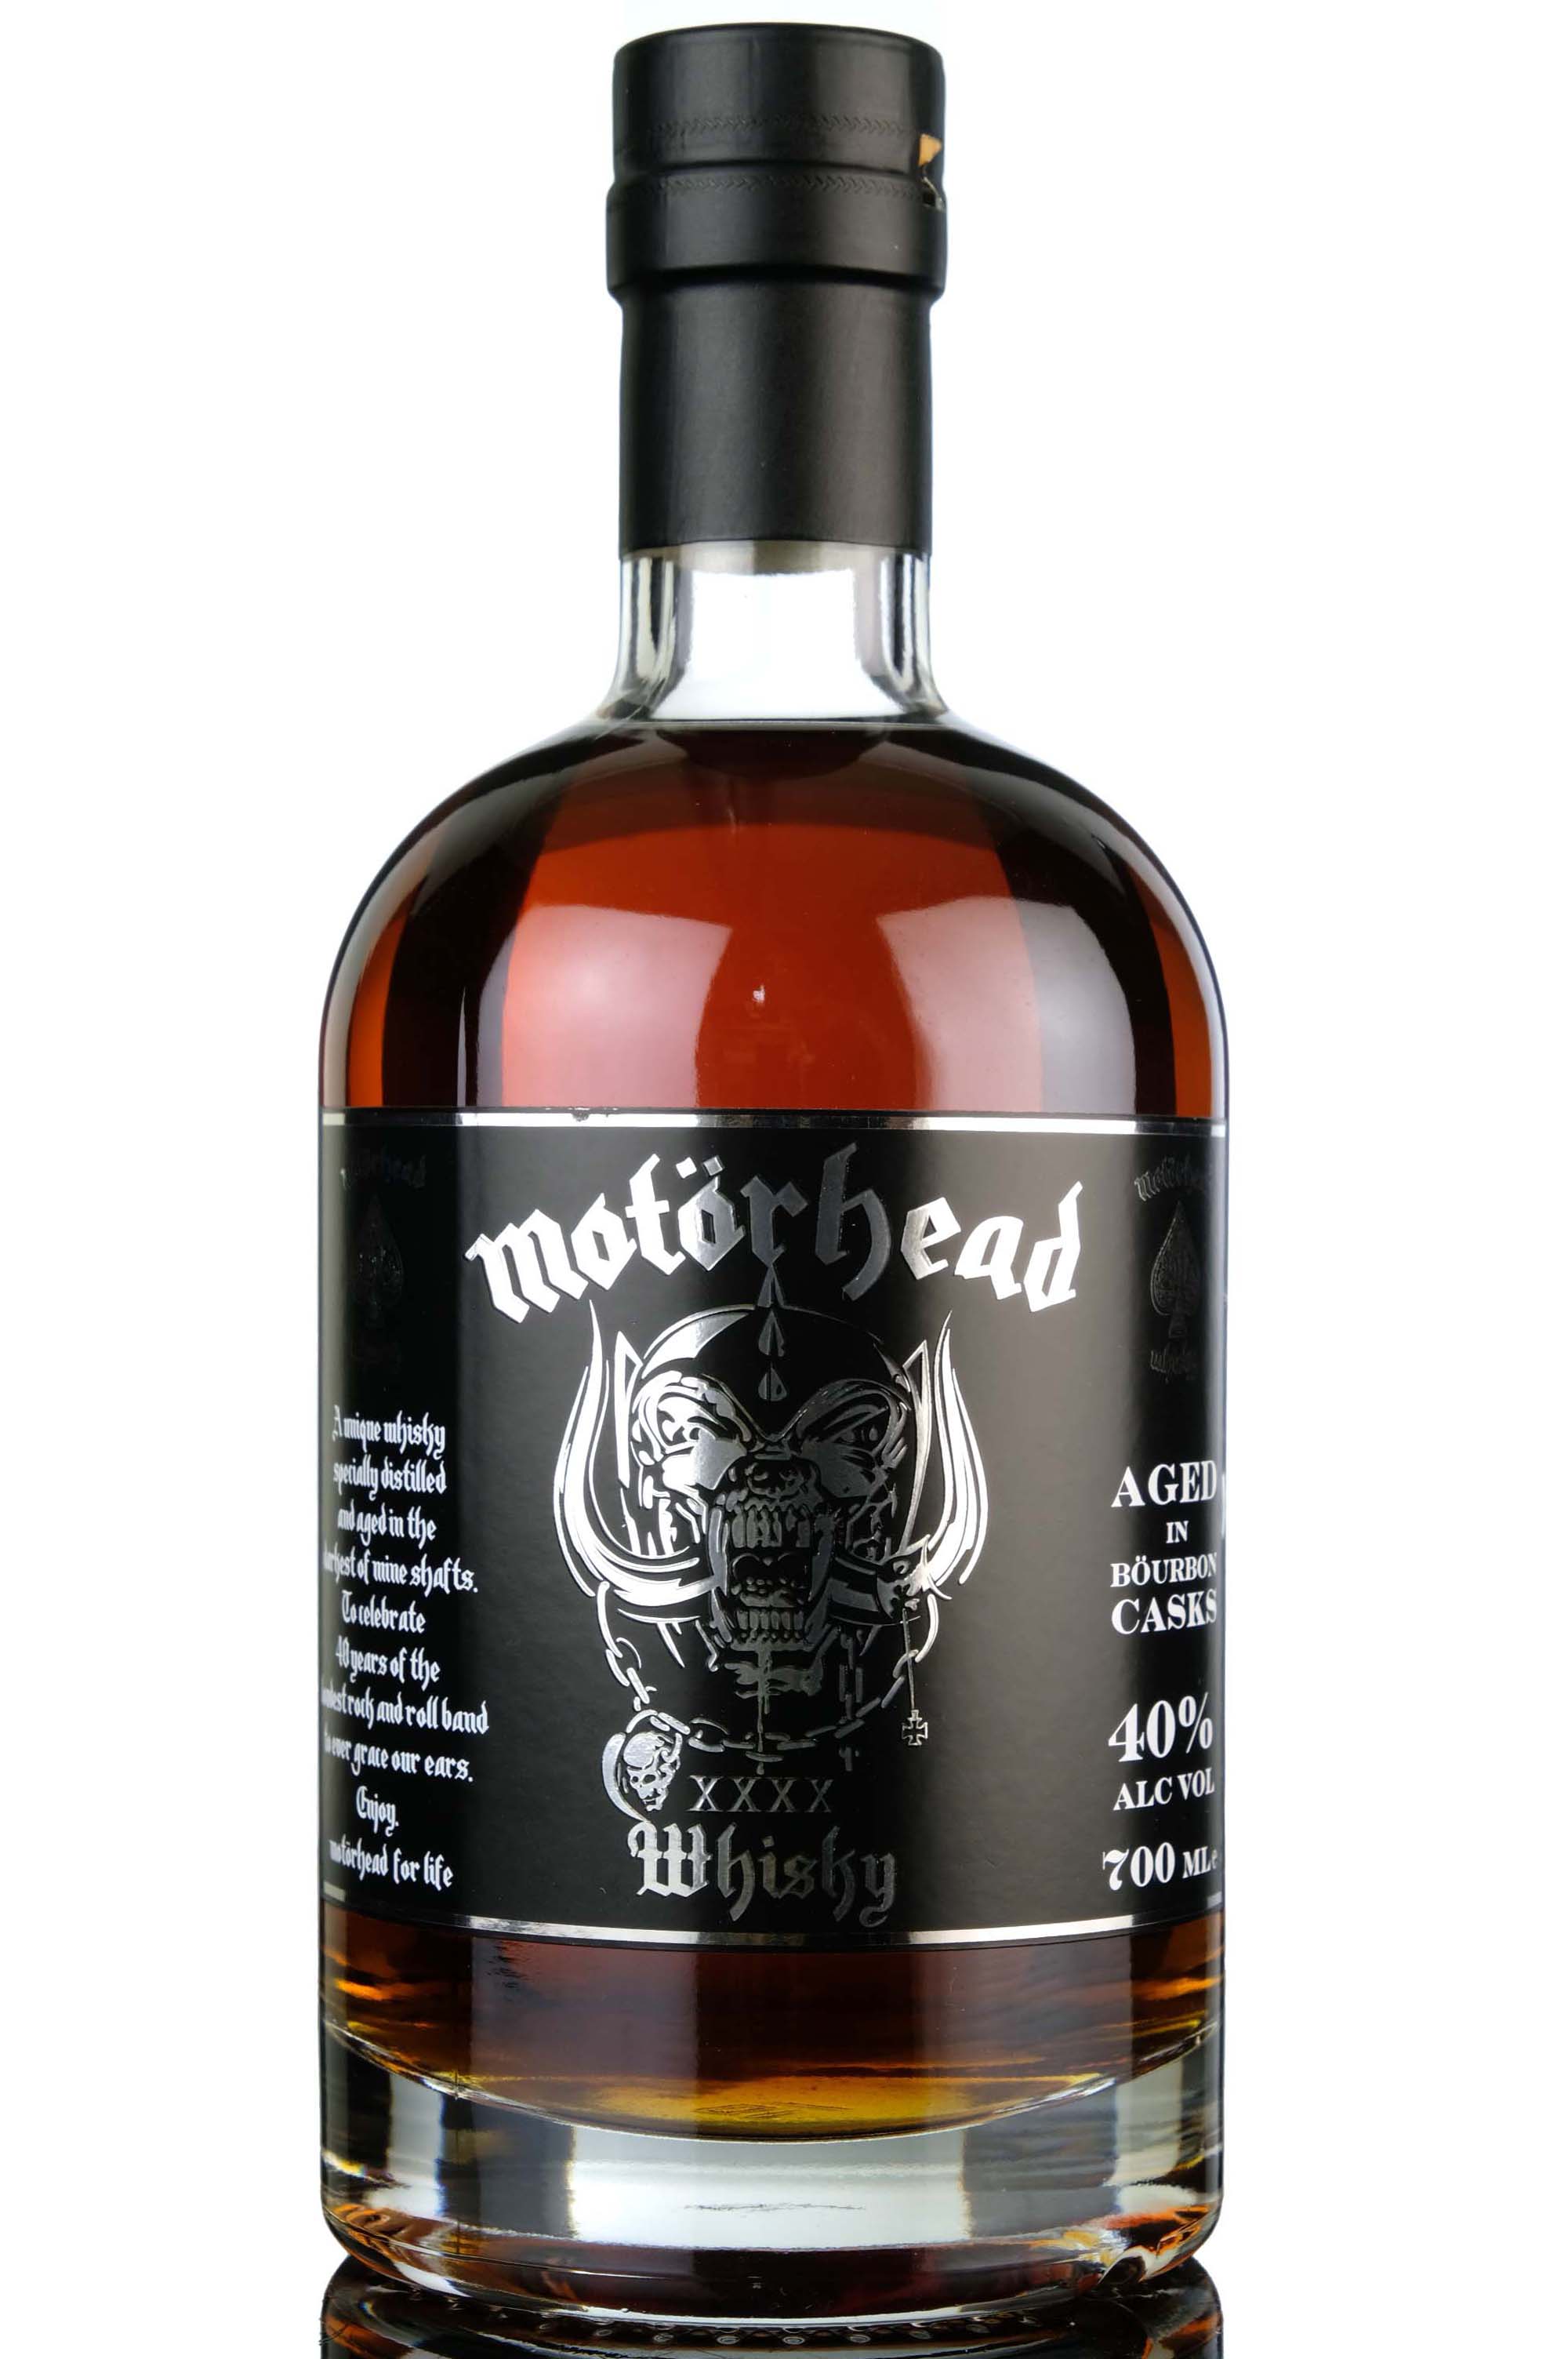 Mackmyra Motorhead XXXX - Batch 1 - 2015 Release